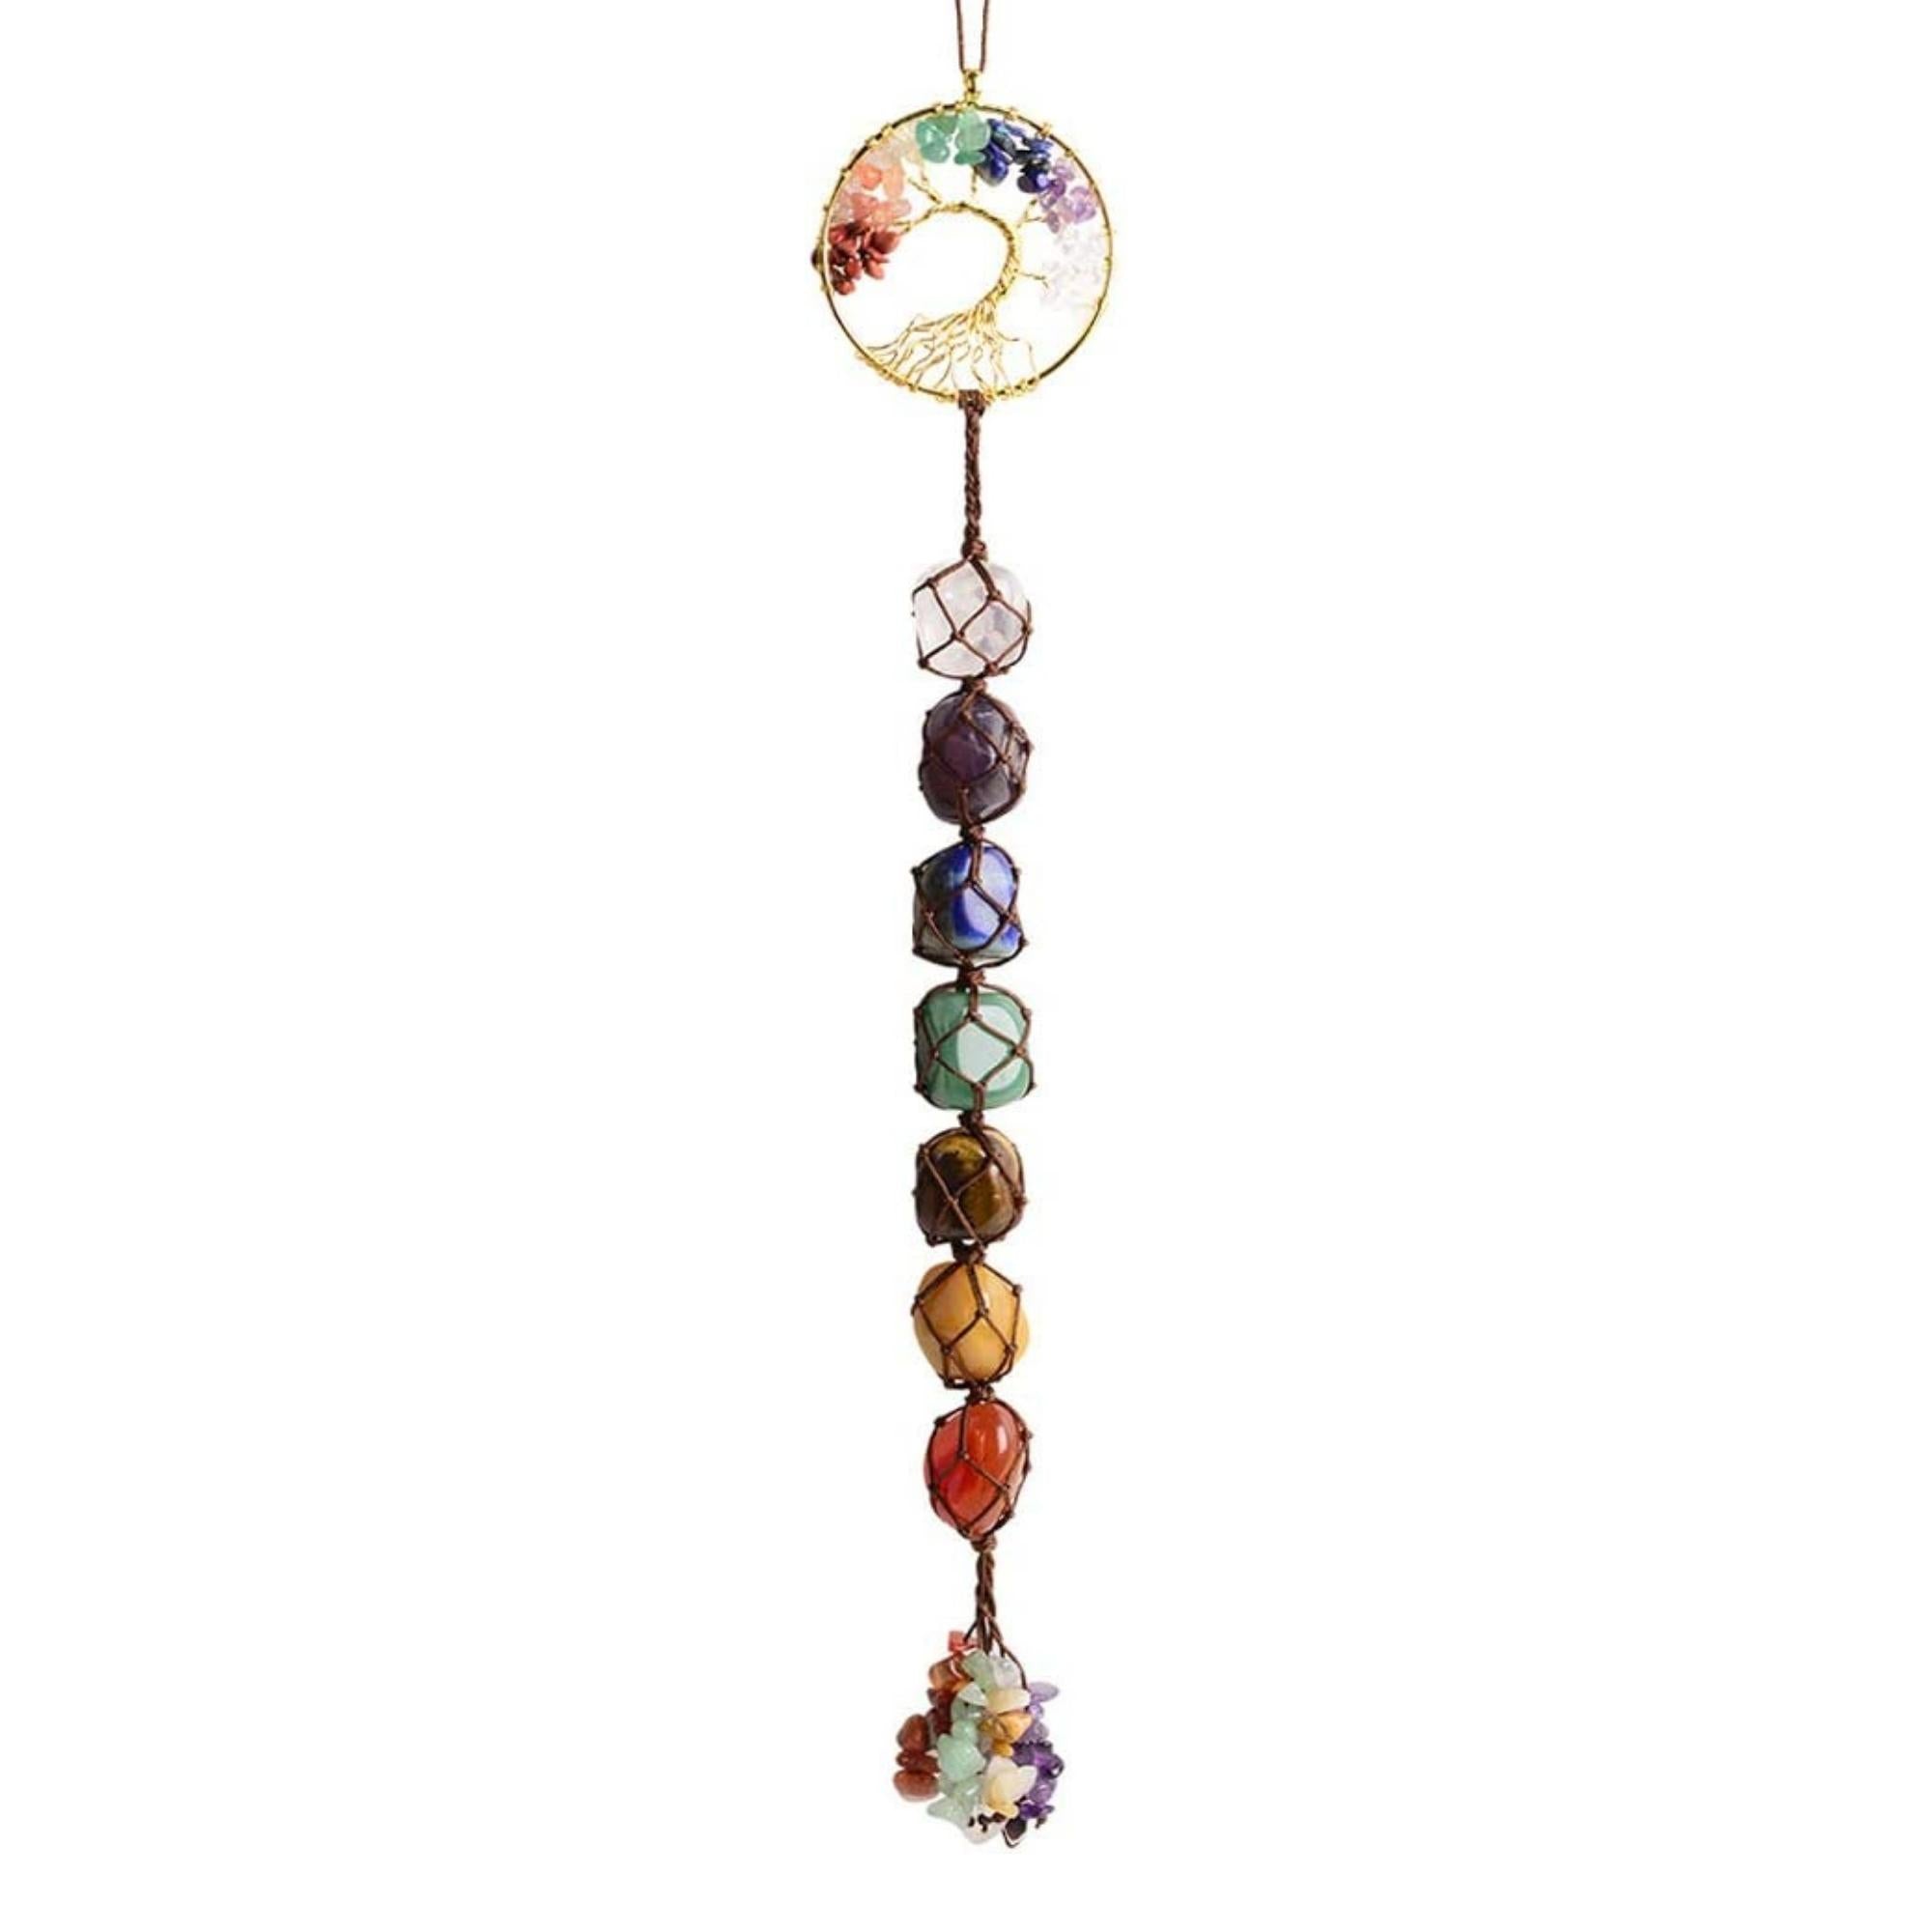 New 7 Chakra Car Hanging Pendant With Tree Of Life Pendant, Chakra Healing Gemstone Ornaments